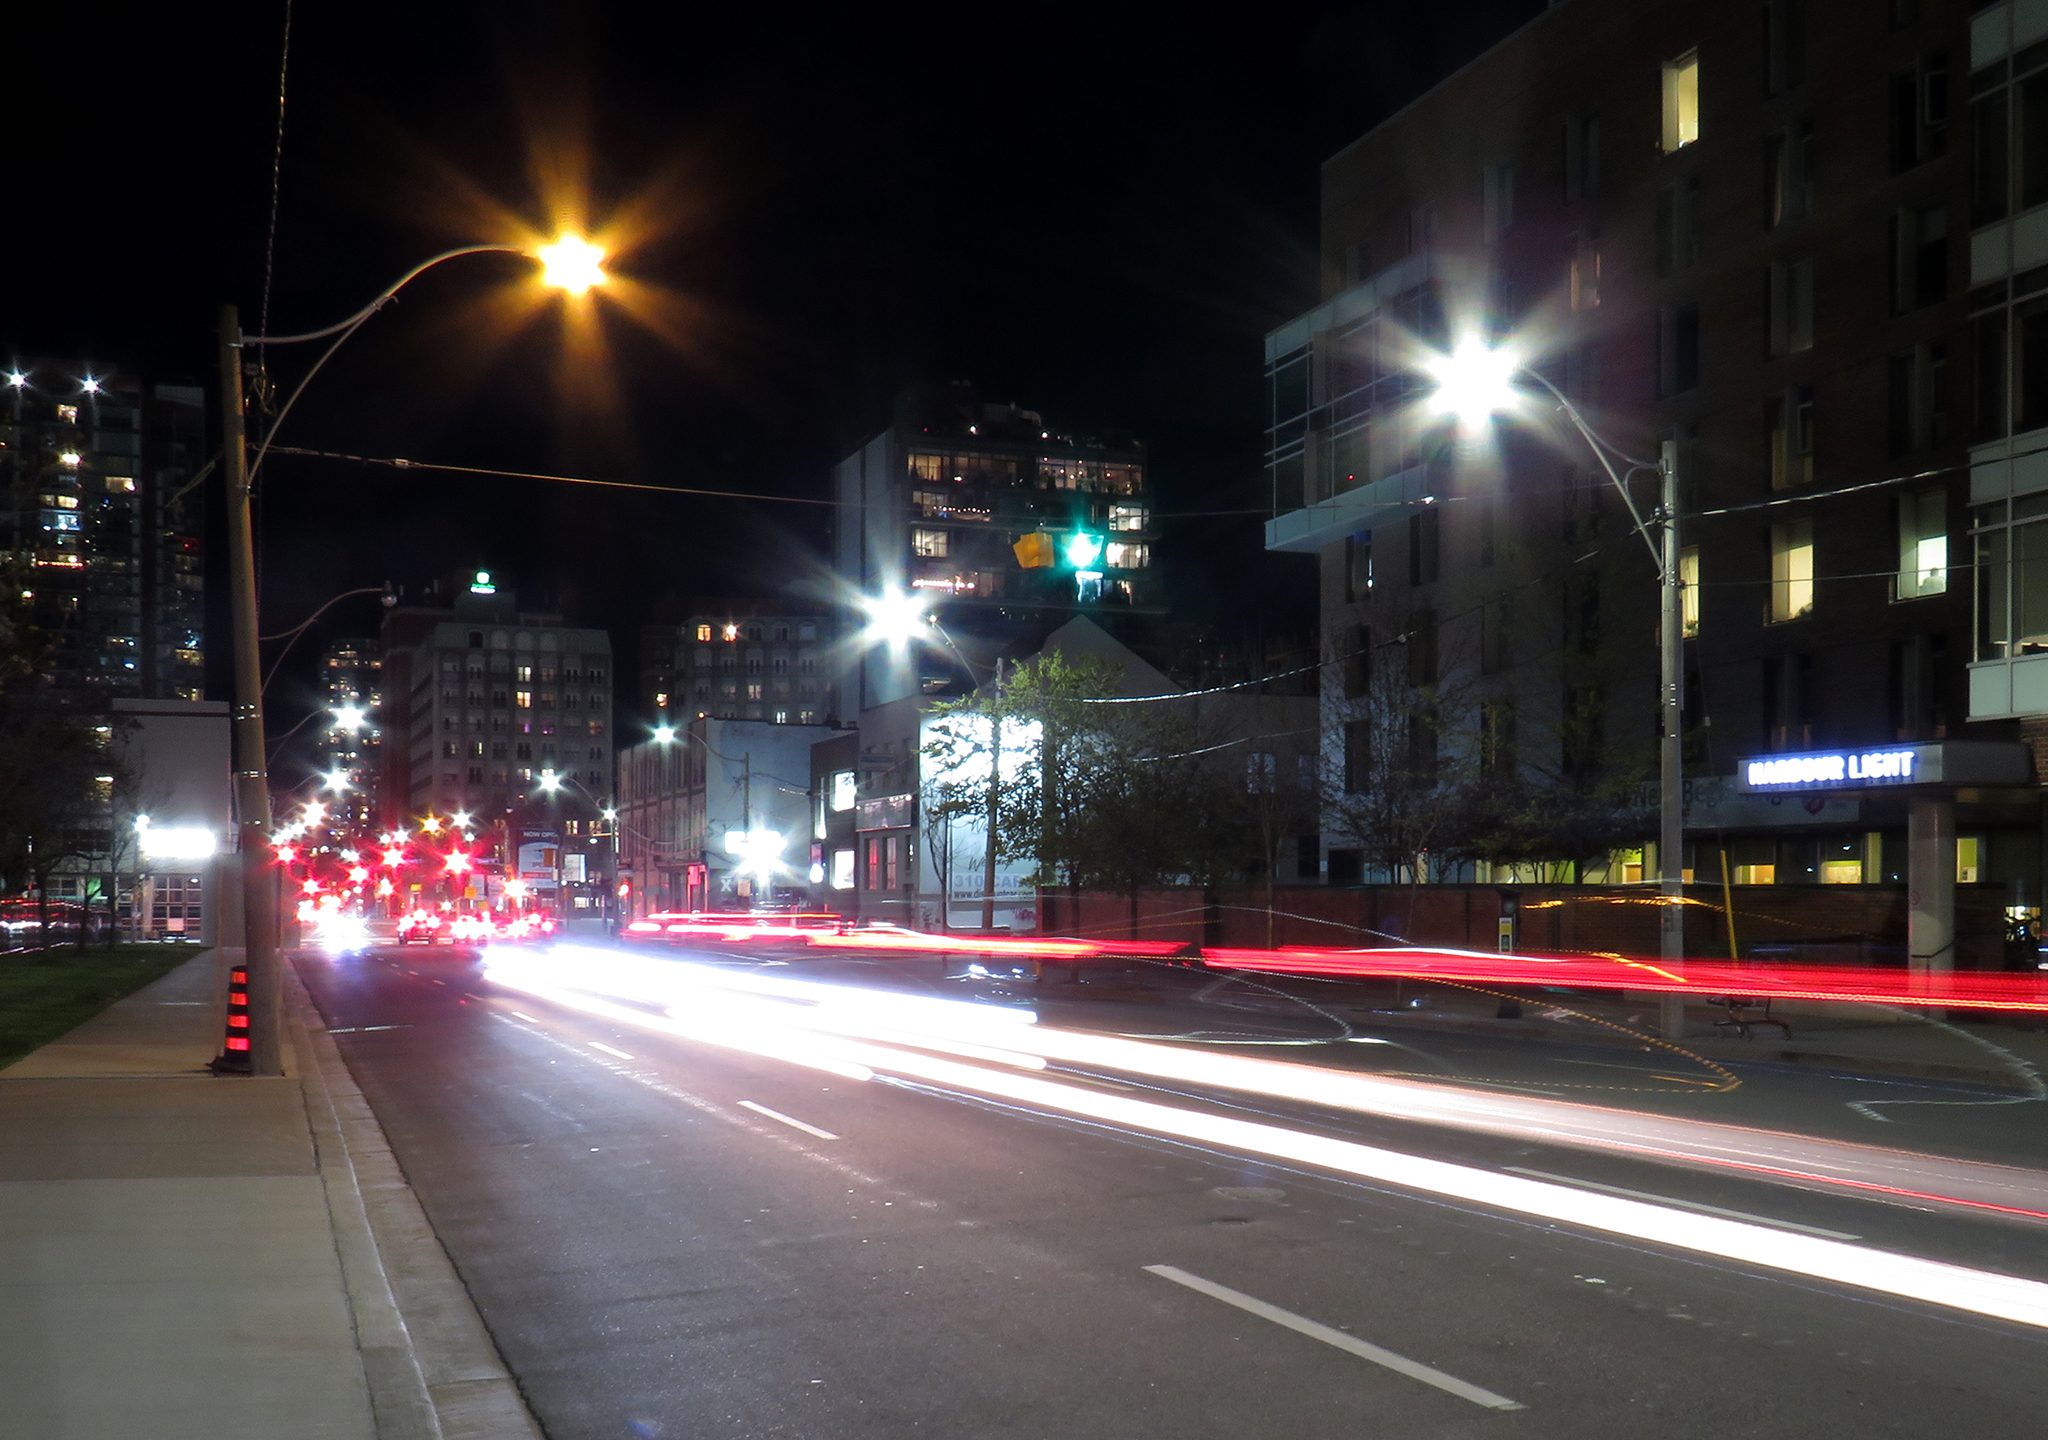 Will Glowing Trees Replace Streetlights? - Lighting